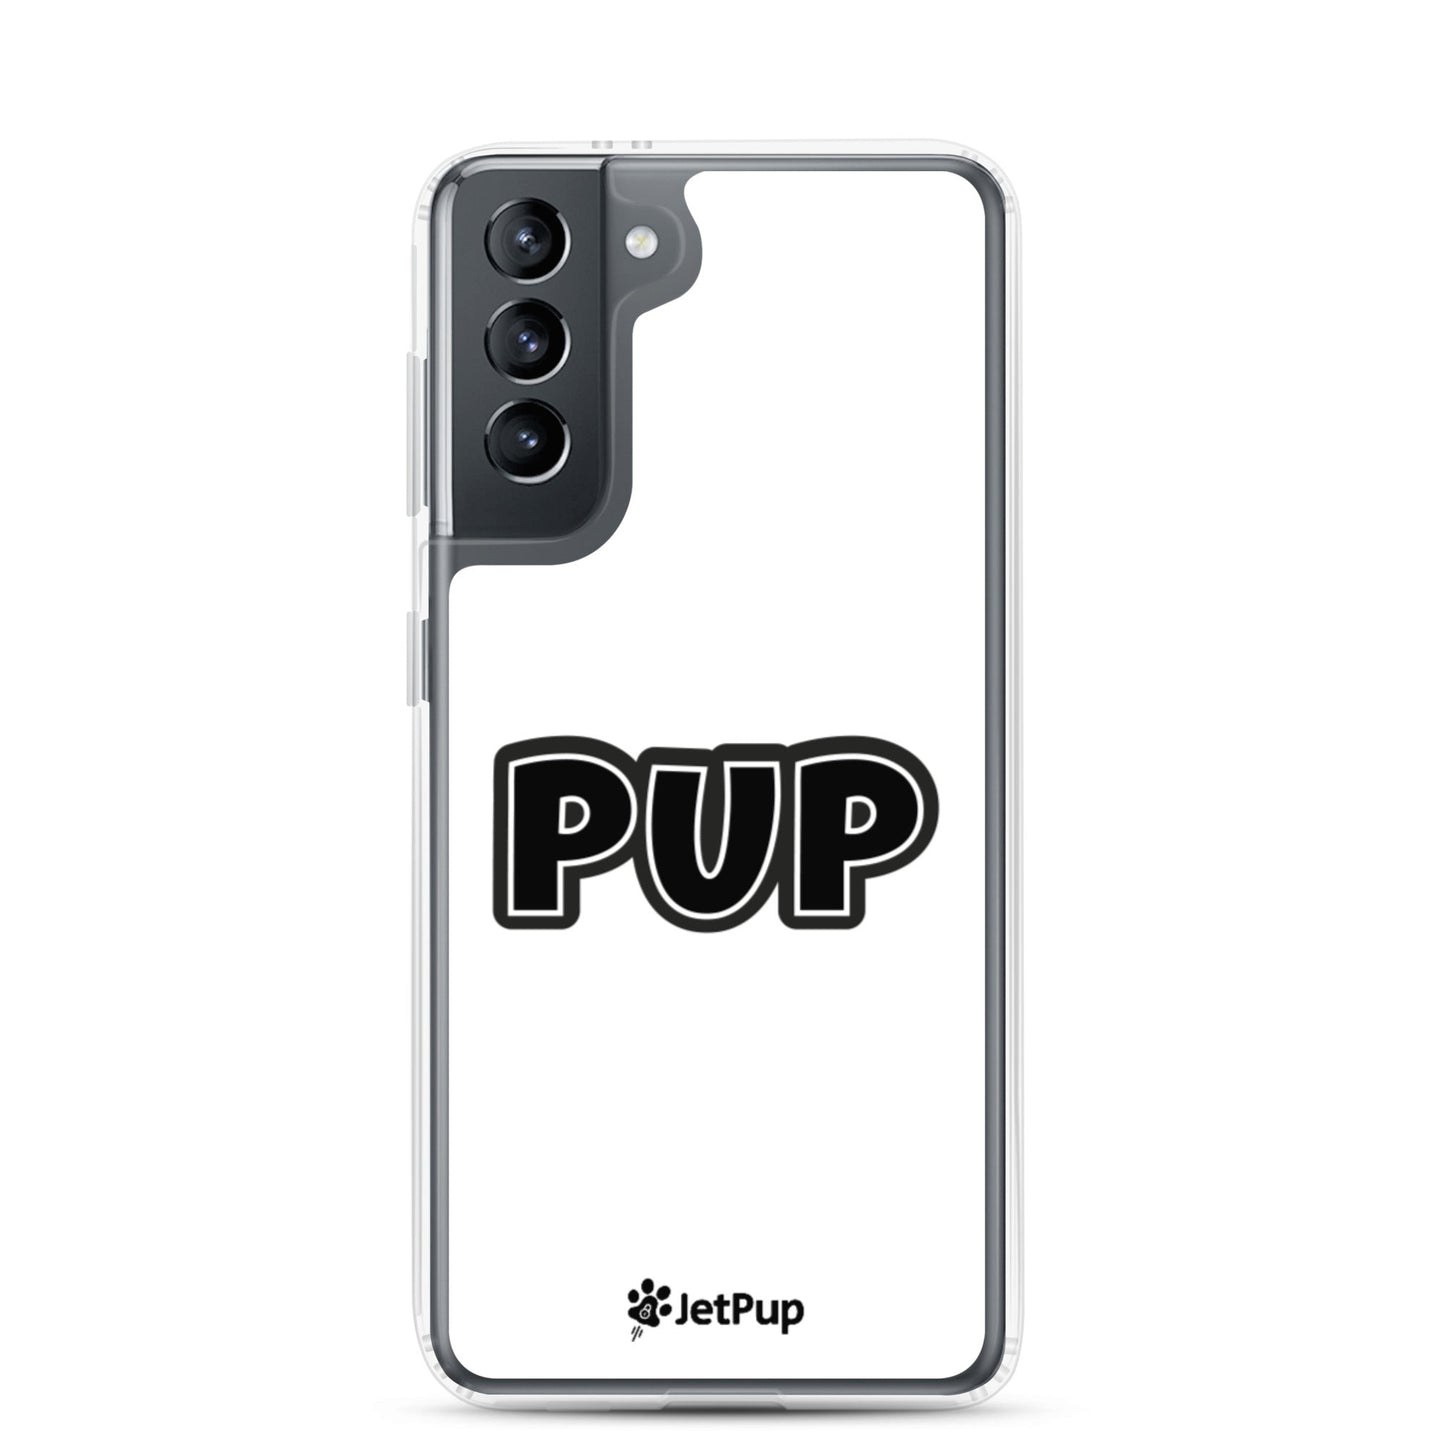 Pup Samsung Case - White - JetPup